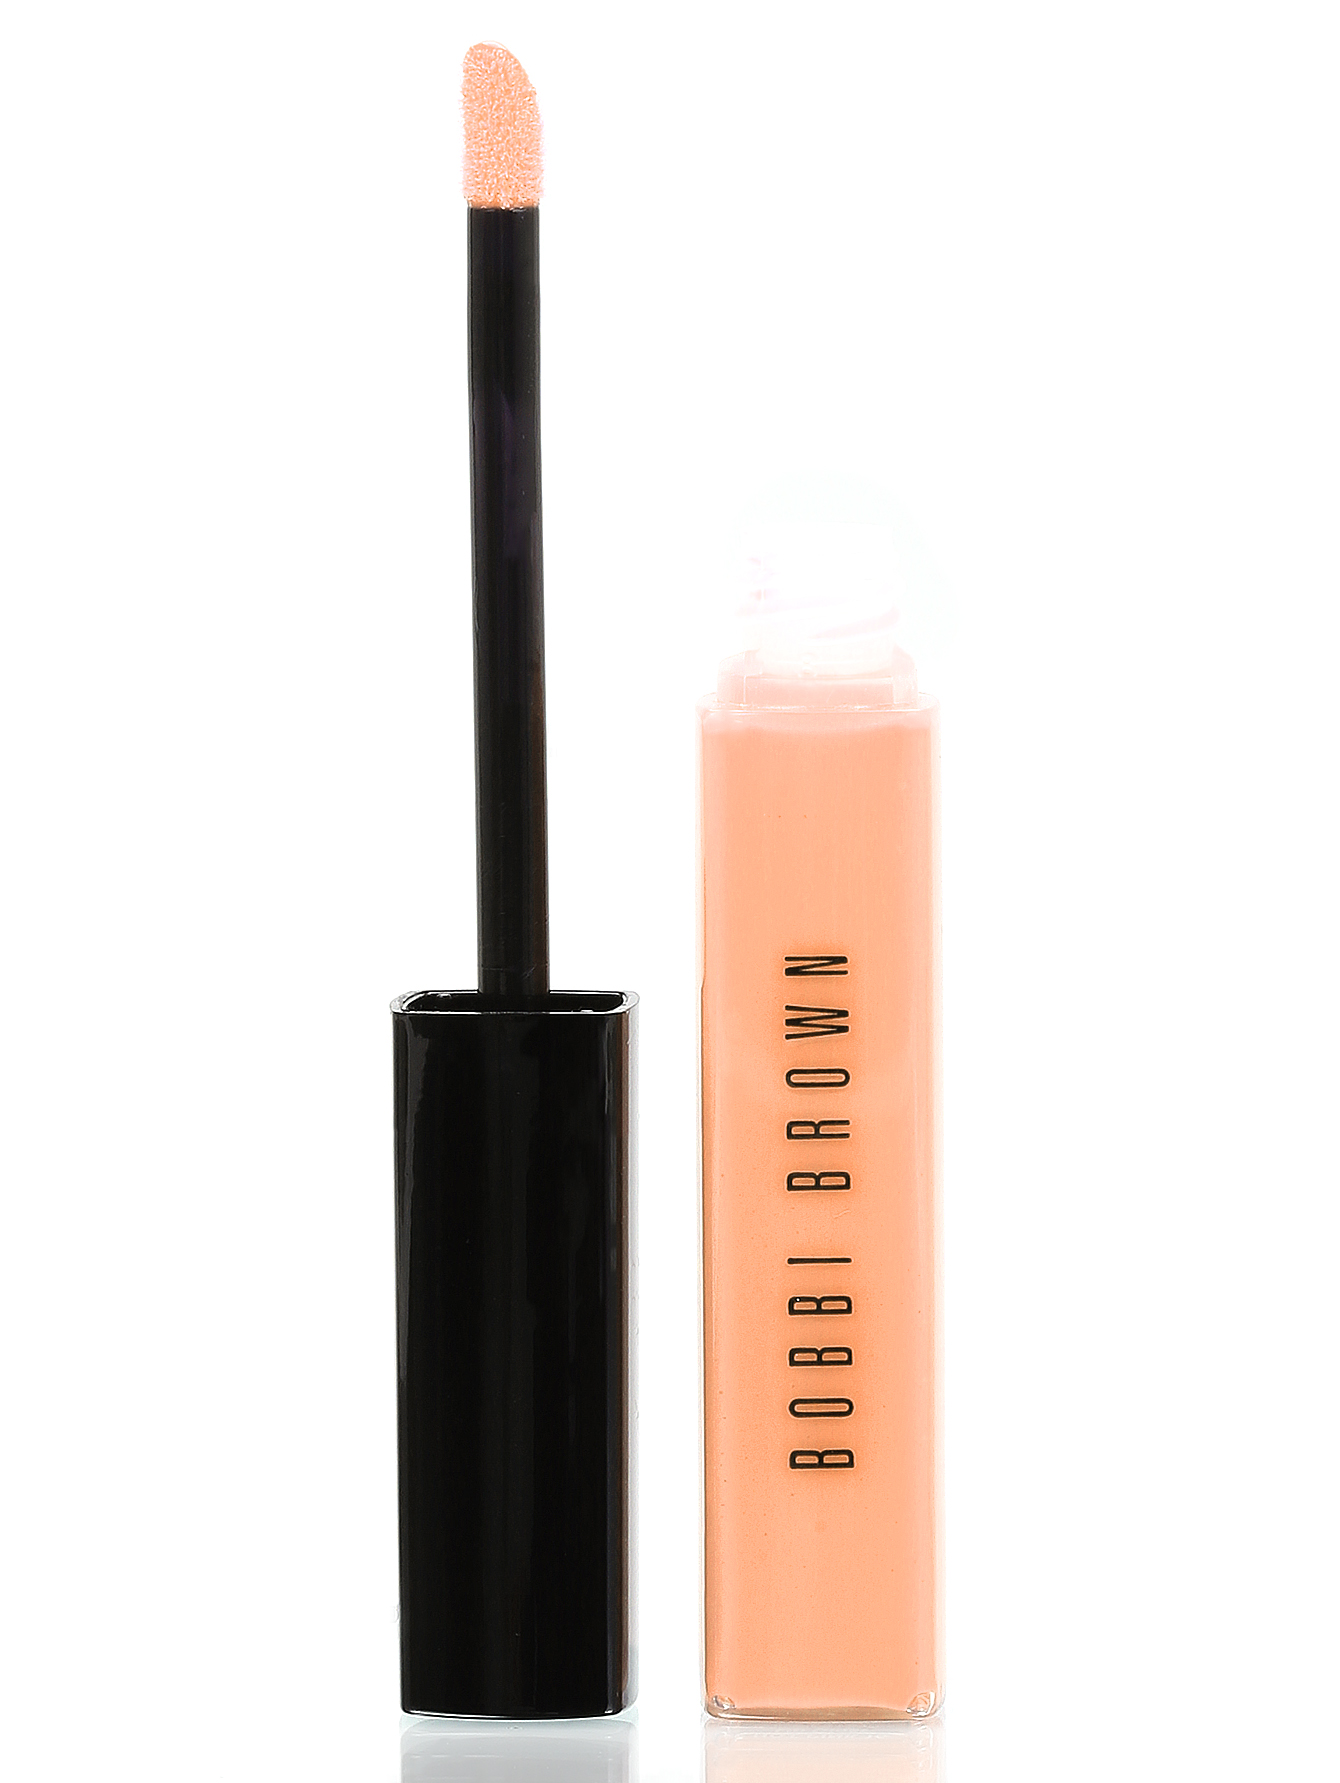 Блеск для губ - Almost Peach, Lip Gloss - Модель Верх-Низ